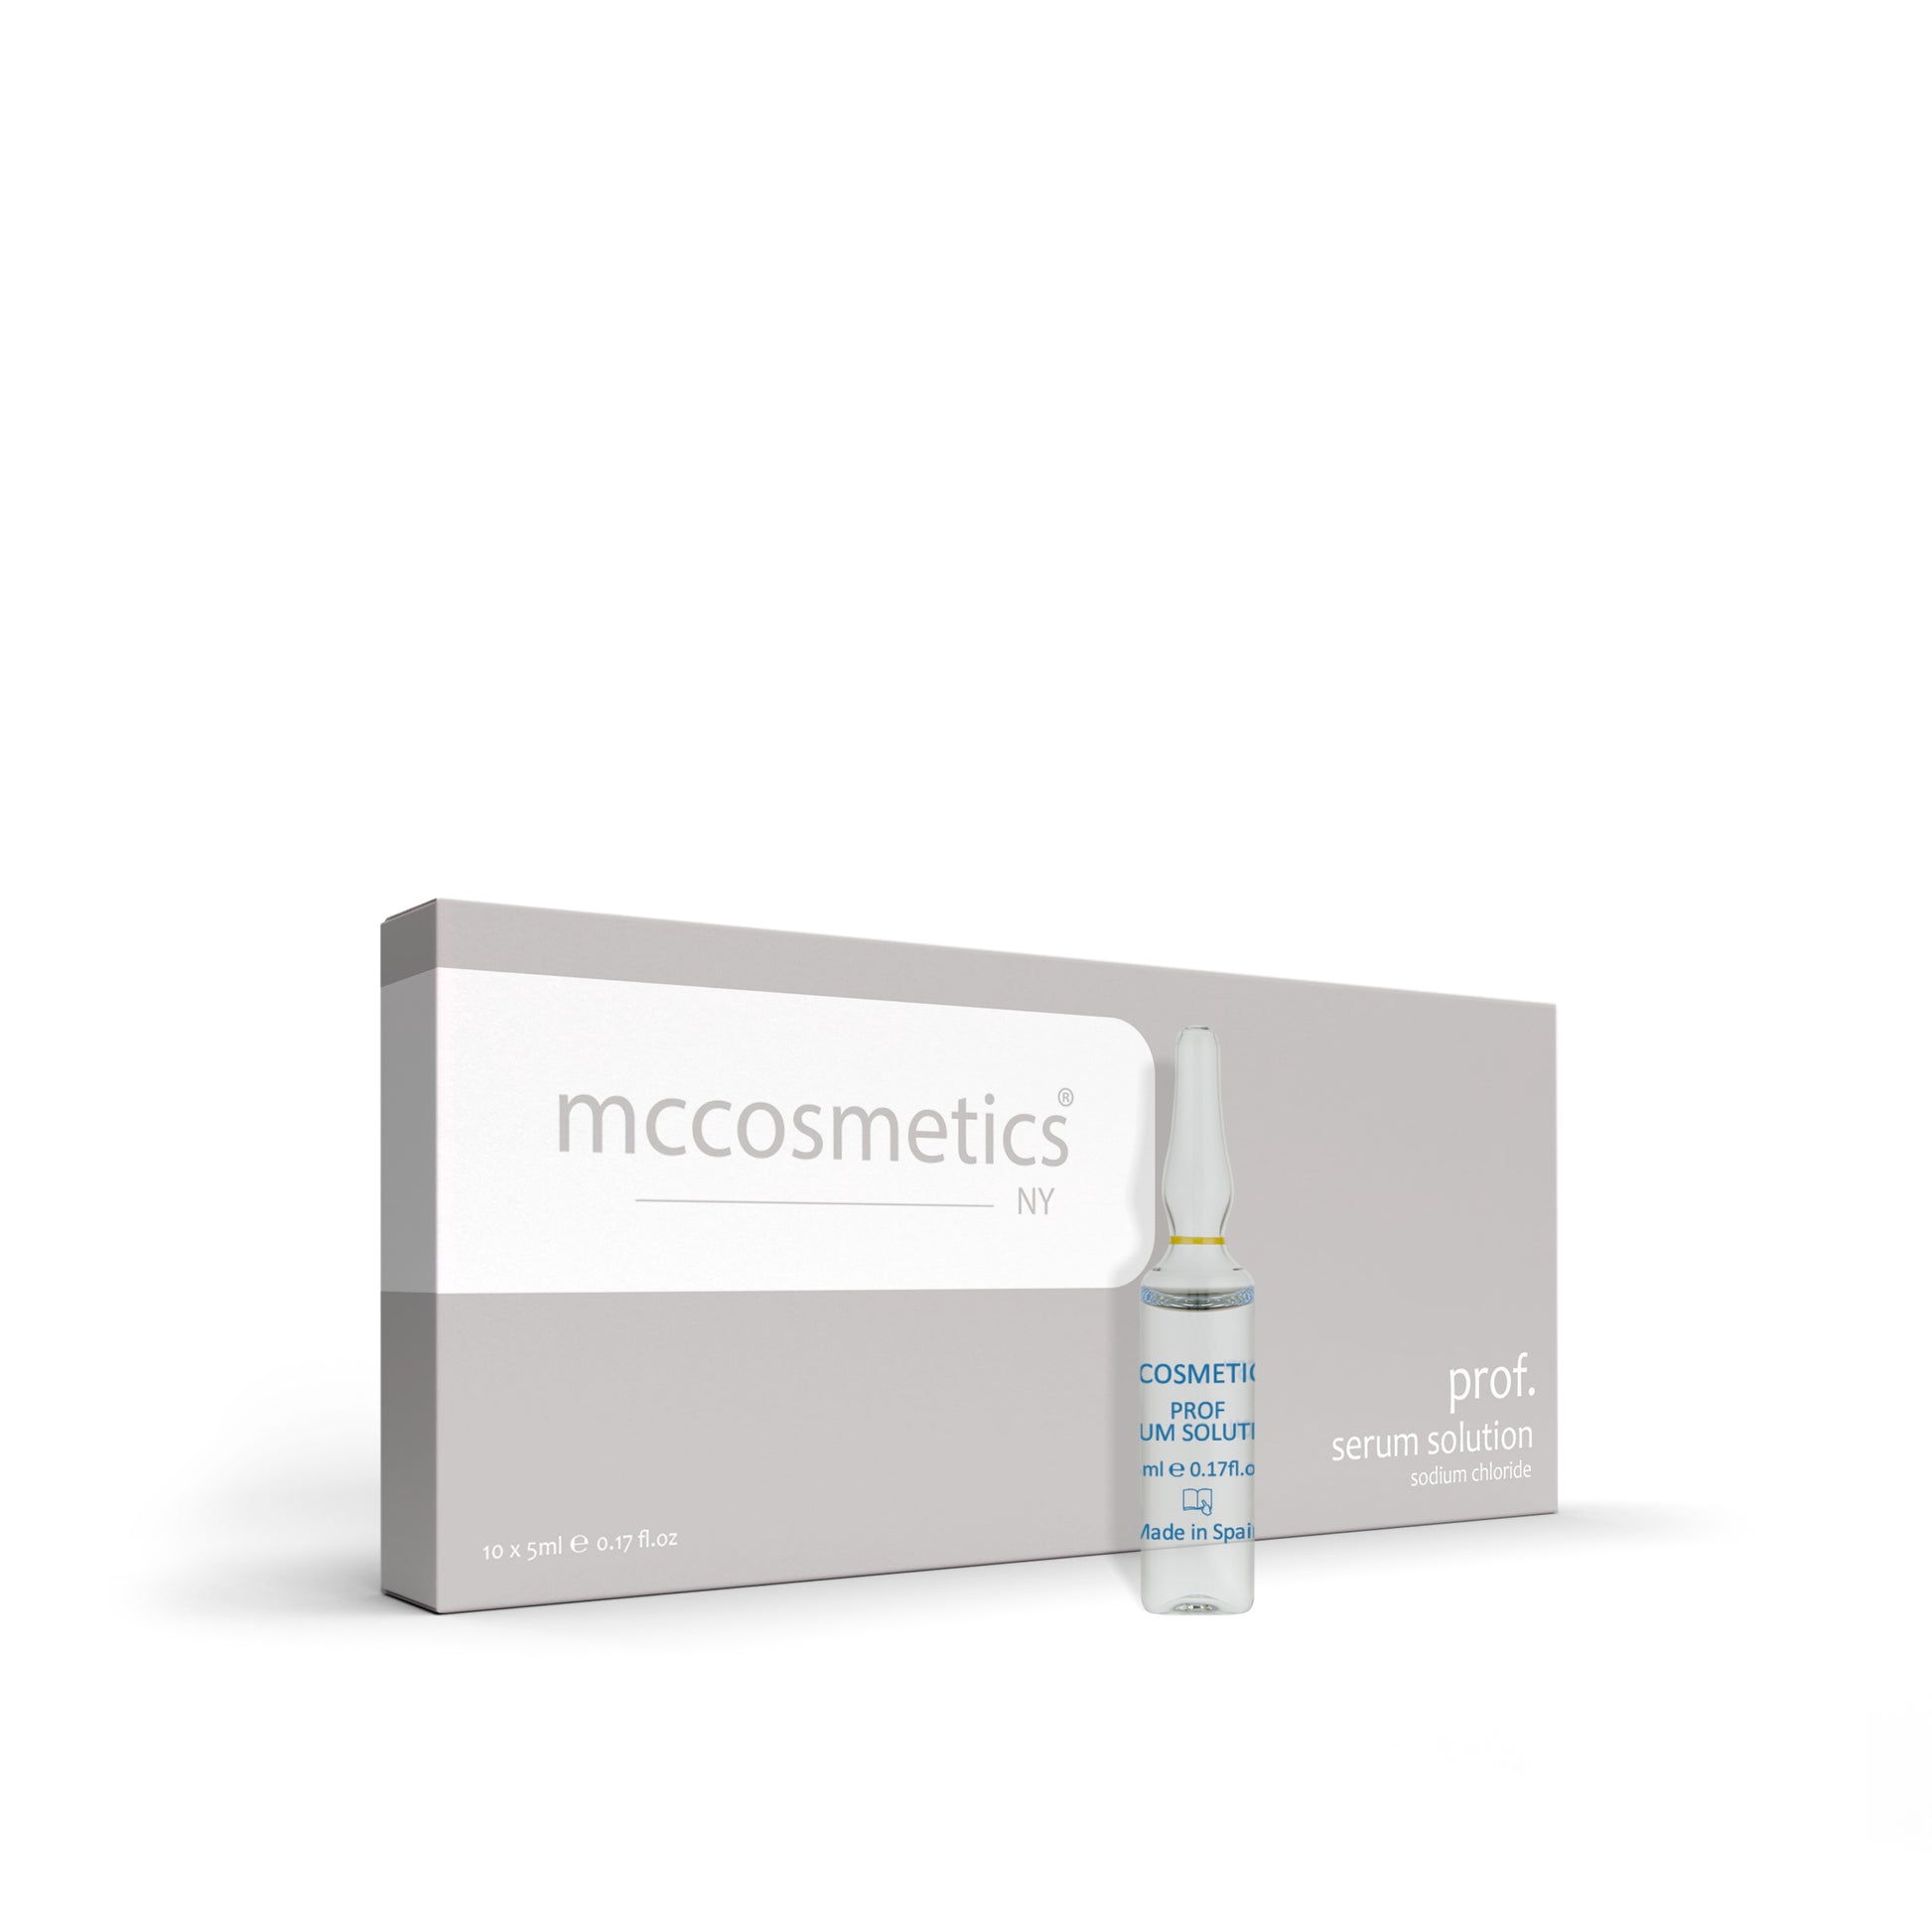 prof. serum solution - mccosmetics.ny